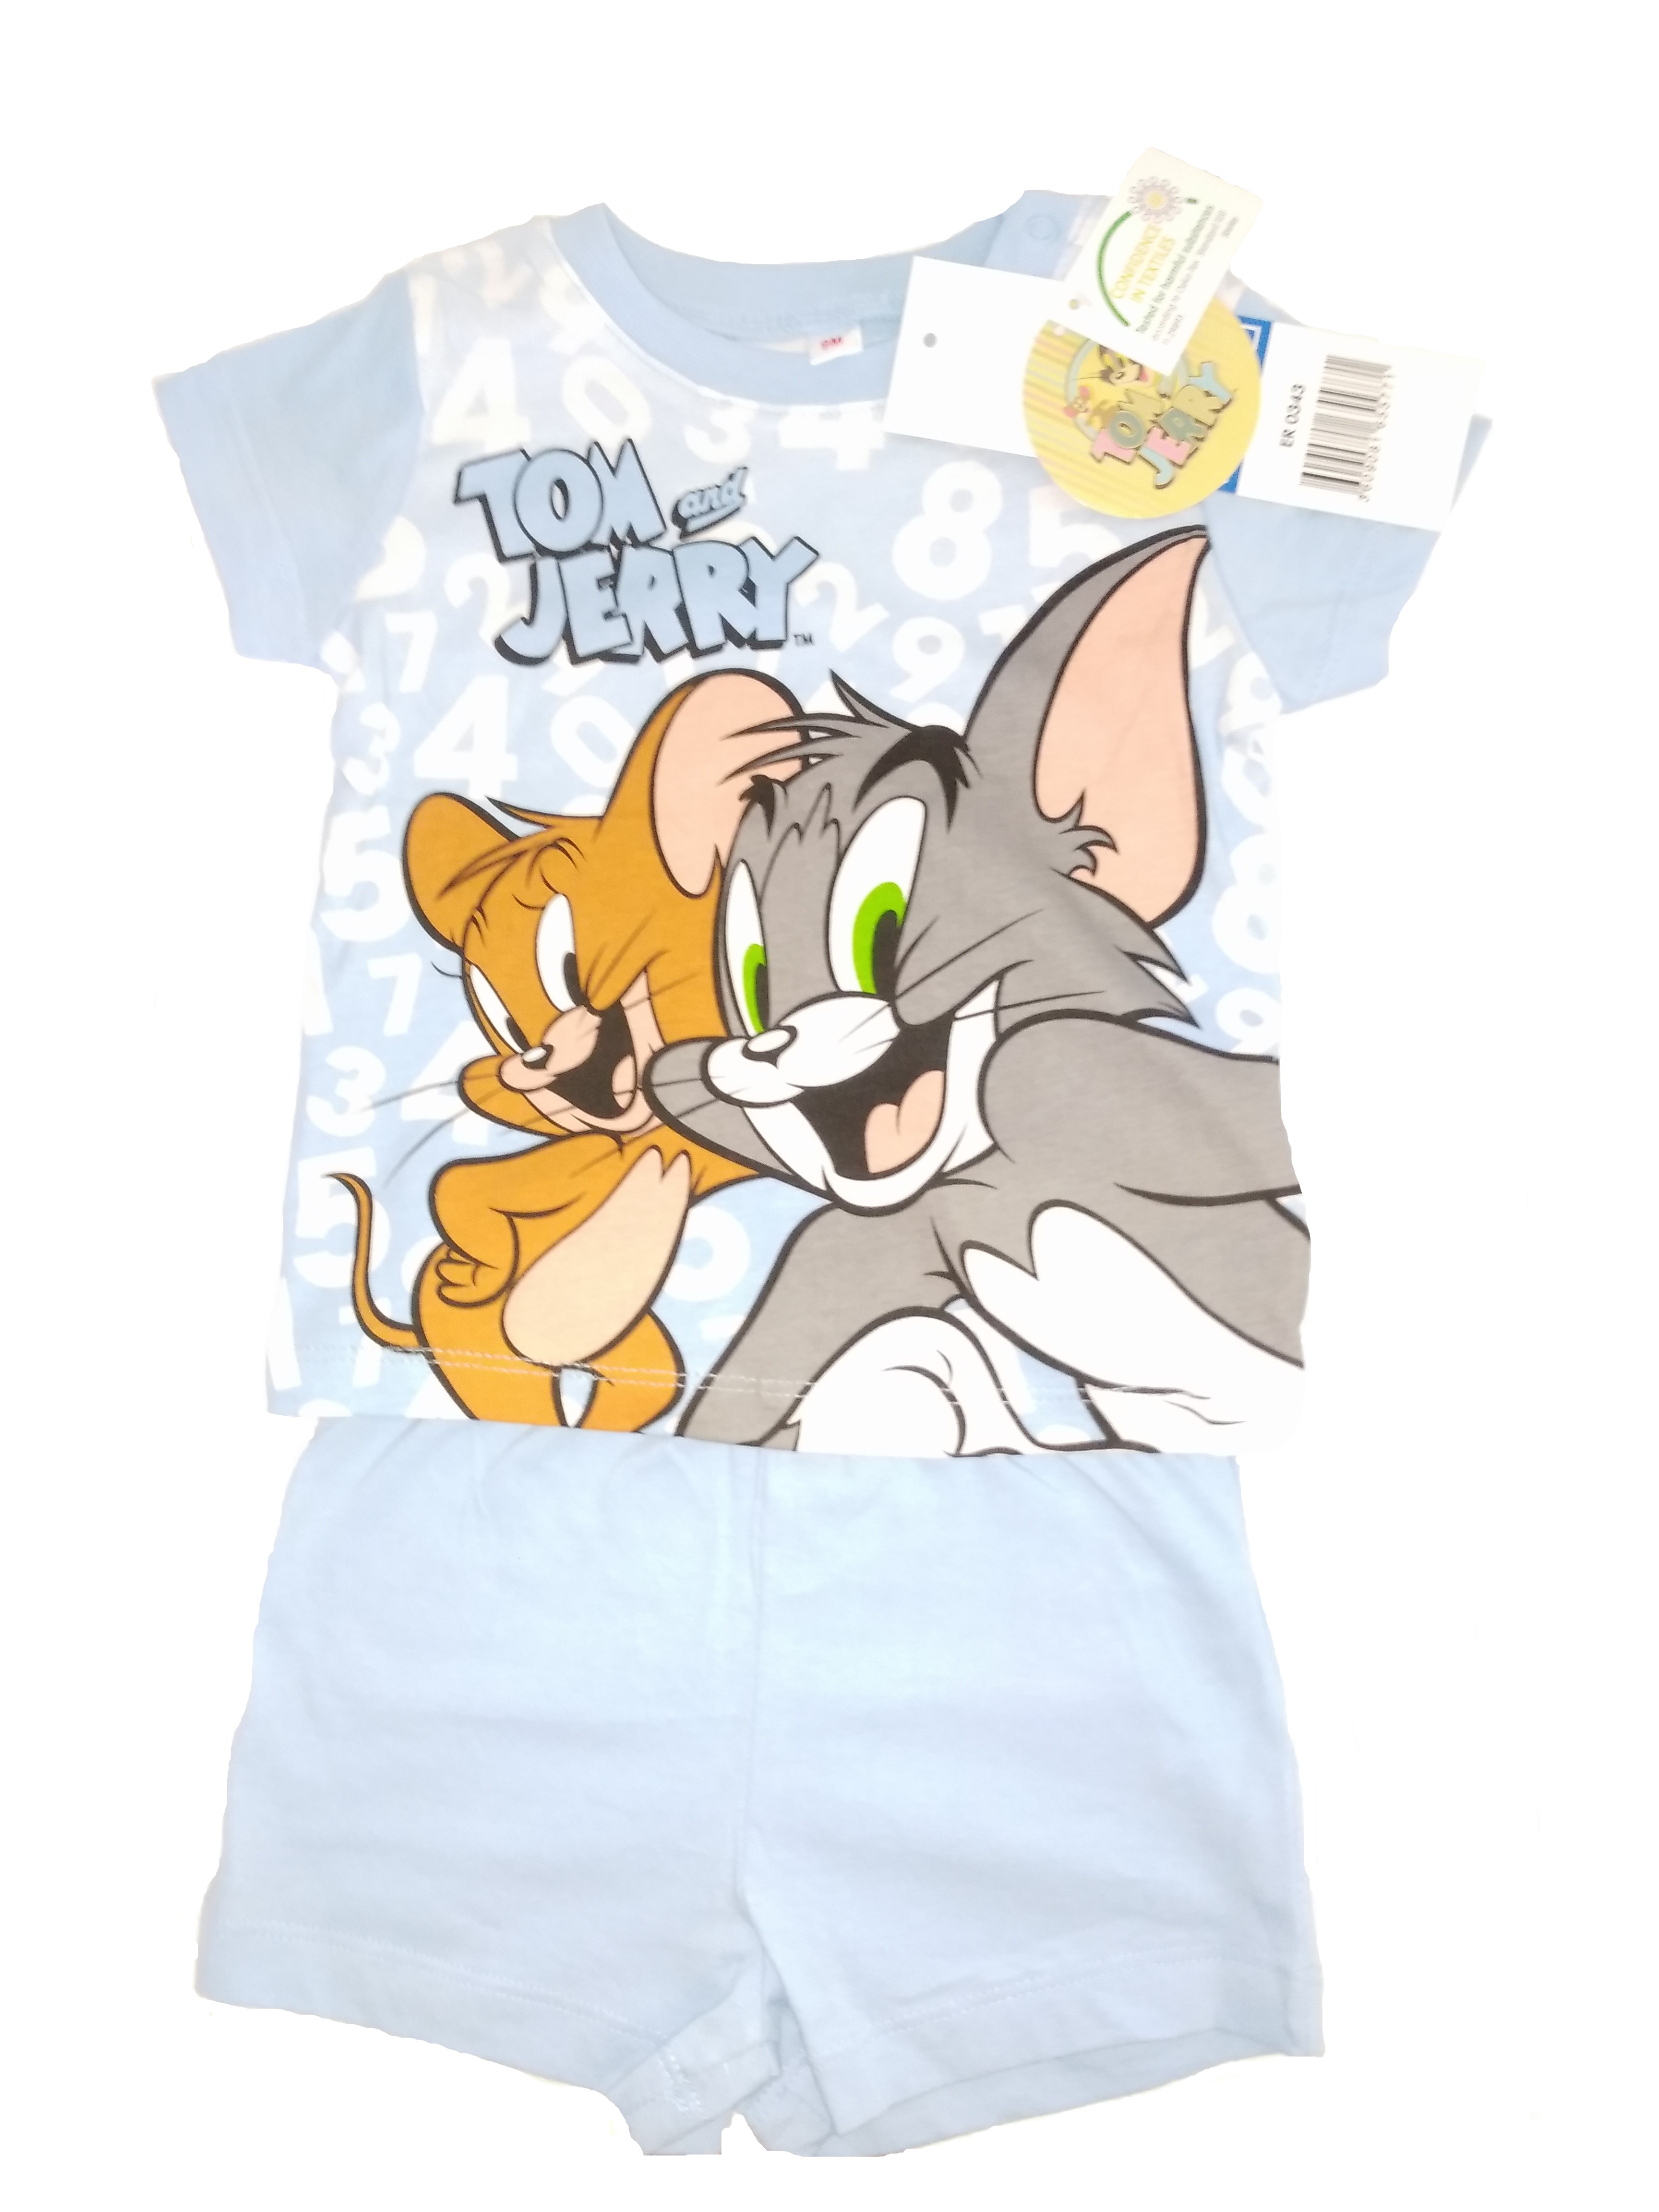 Tom & Jerry Pyjama für Kinder Hellblau (Auswahl)